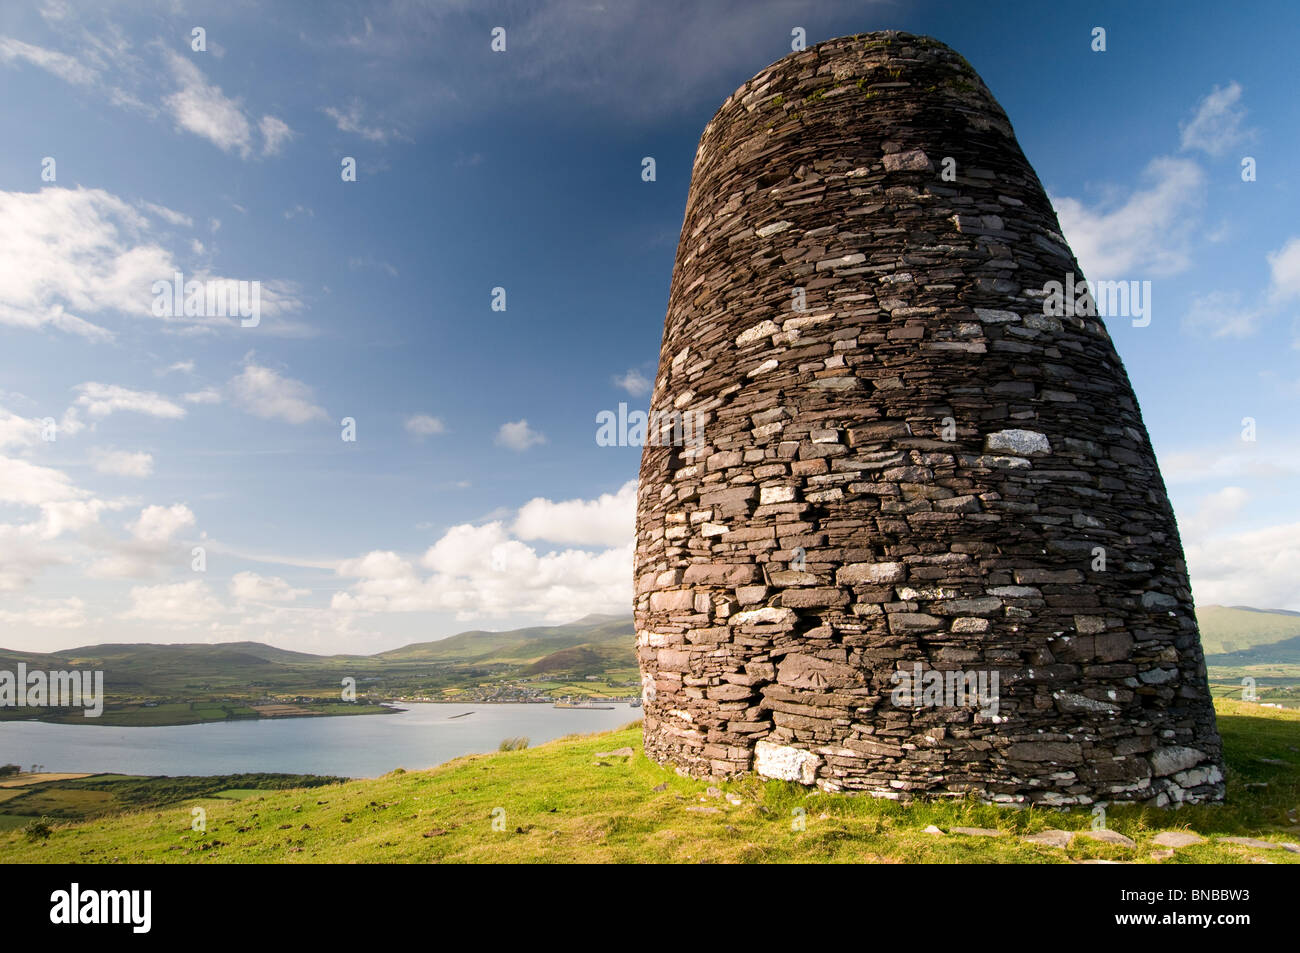 Eask tower overlooking Dingle bay, Dingle Peninsula, County Kerry, Ireland Stock Photo